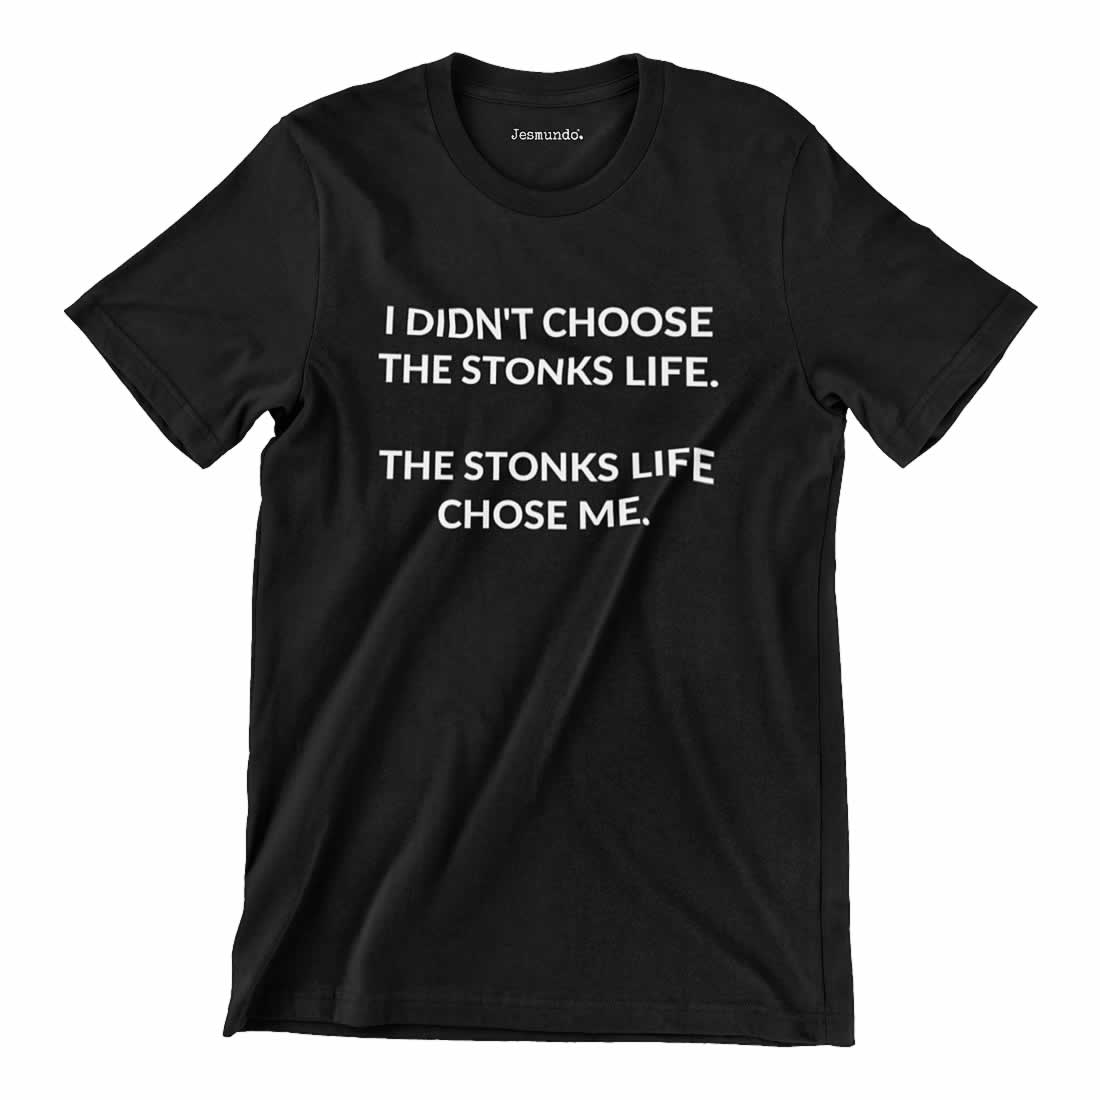 The Stonks Life T-Shirt